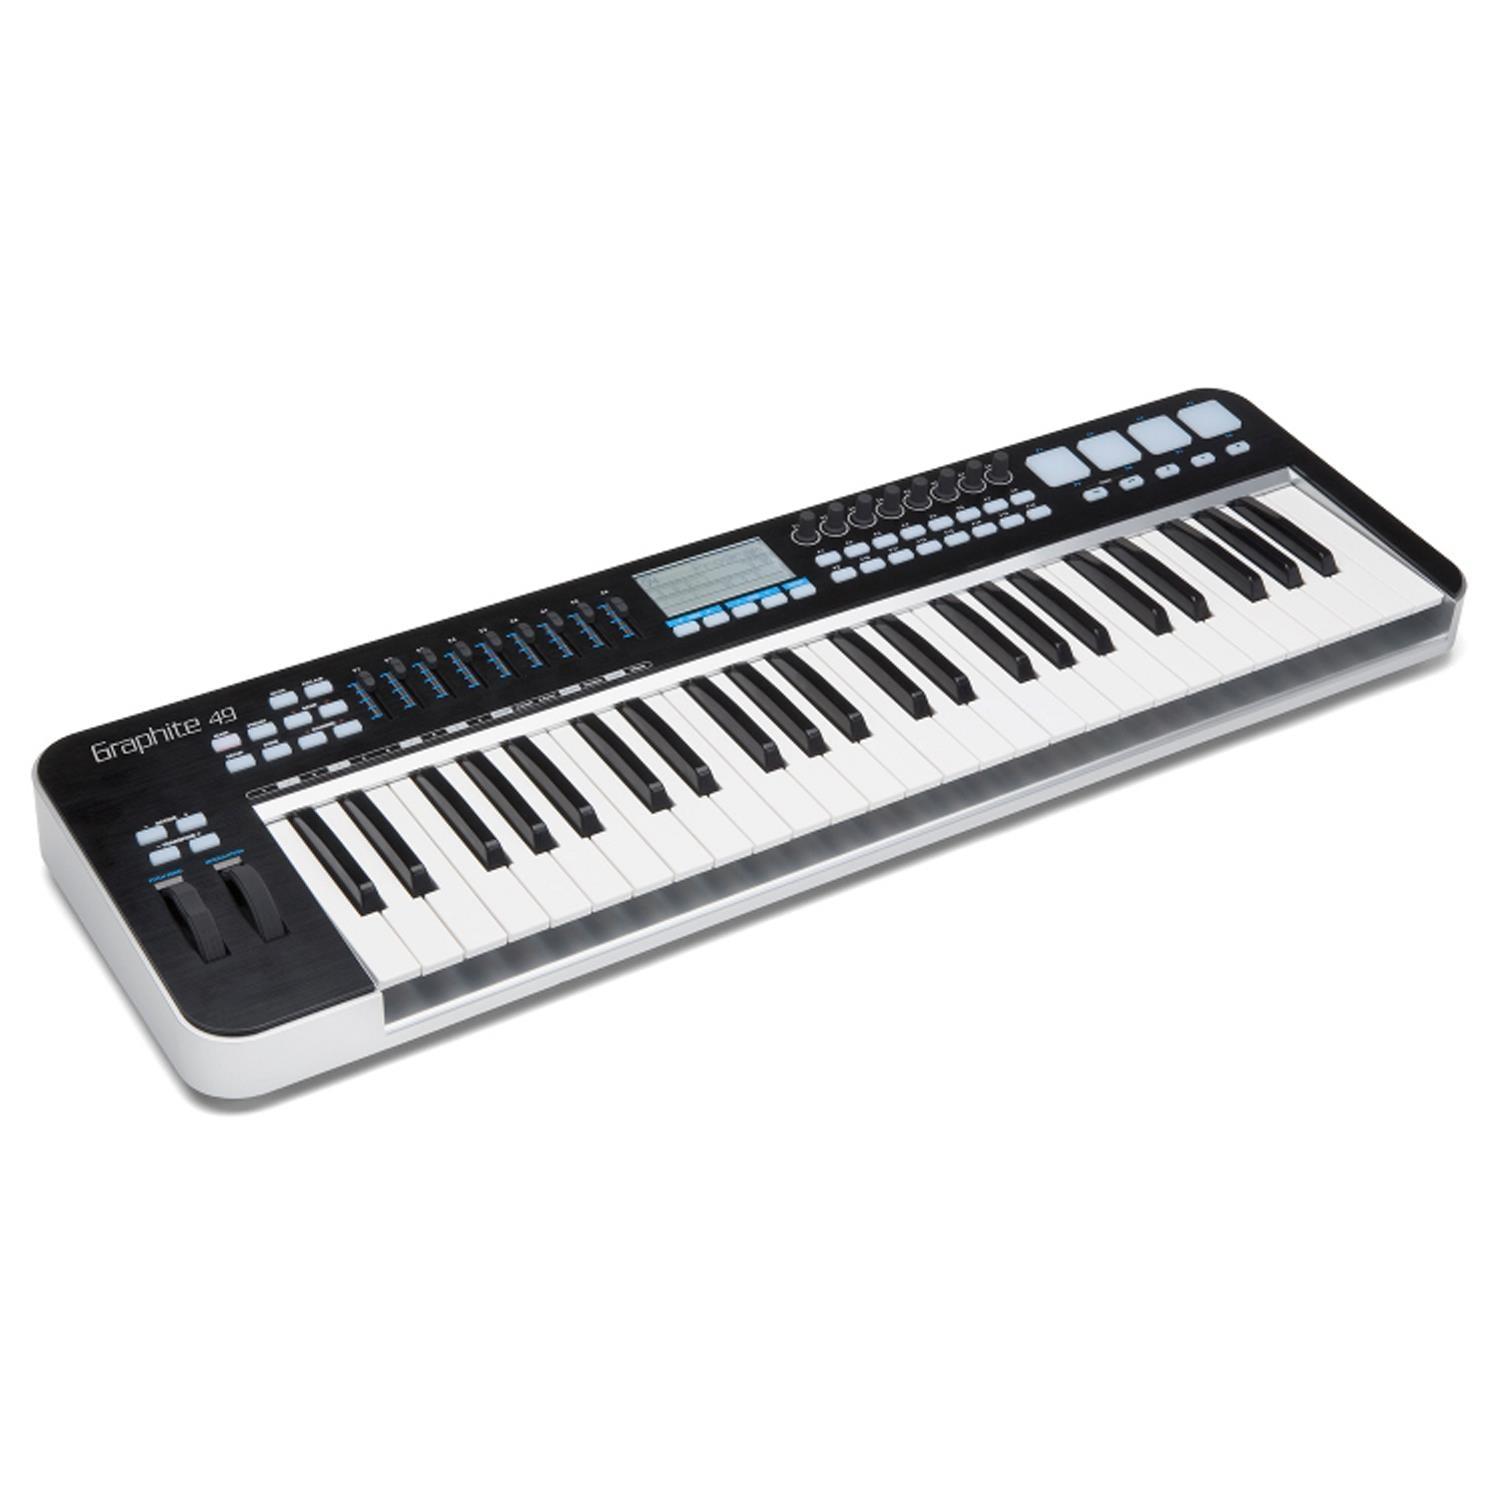 Samson Graphite 49 Midi Keyboard Controller - DY Pro Audio